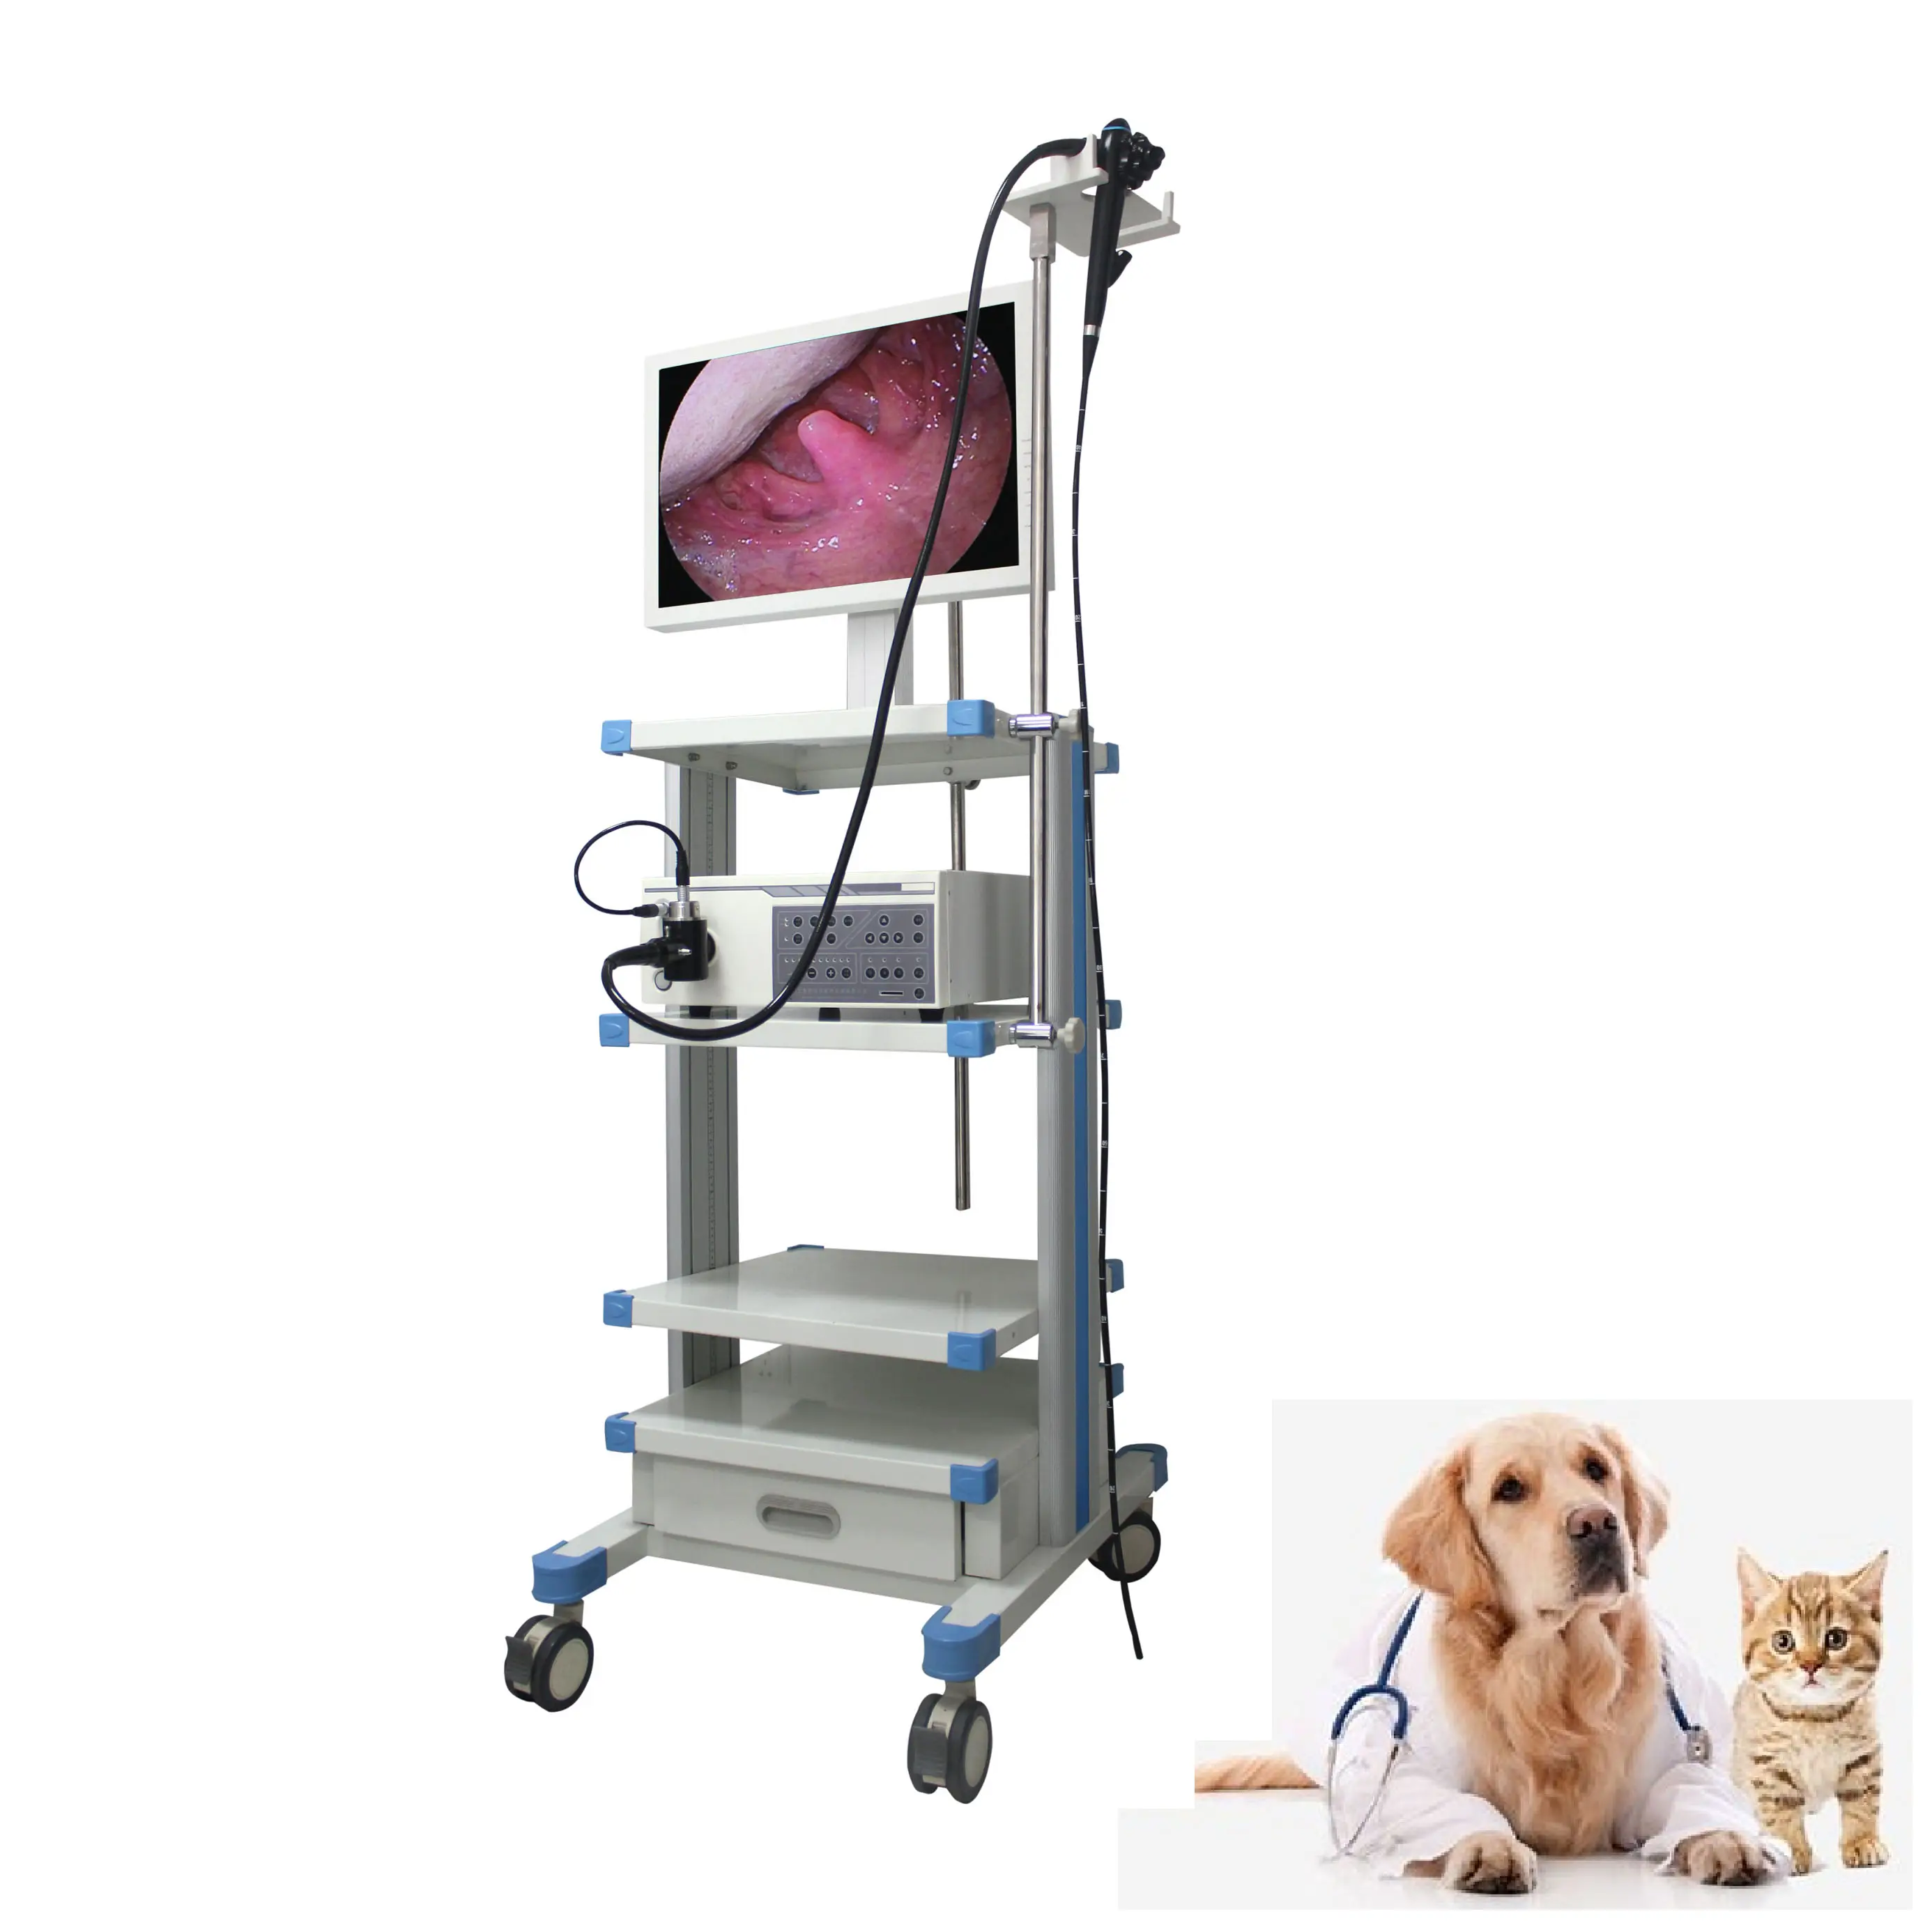 Portable Medical Gastroscopy Video Camera Veterinary Endoscope Colonoscopy Equipment Camera Endoscope Vet video endoscope